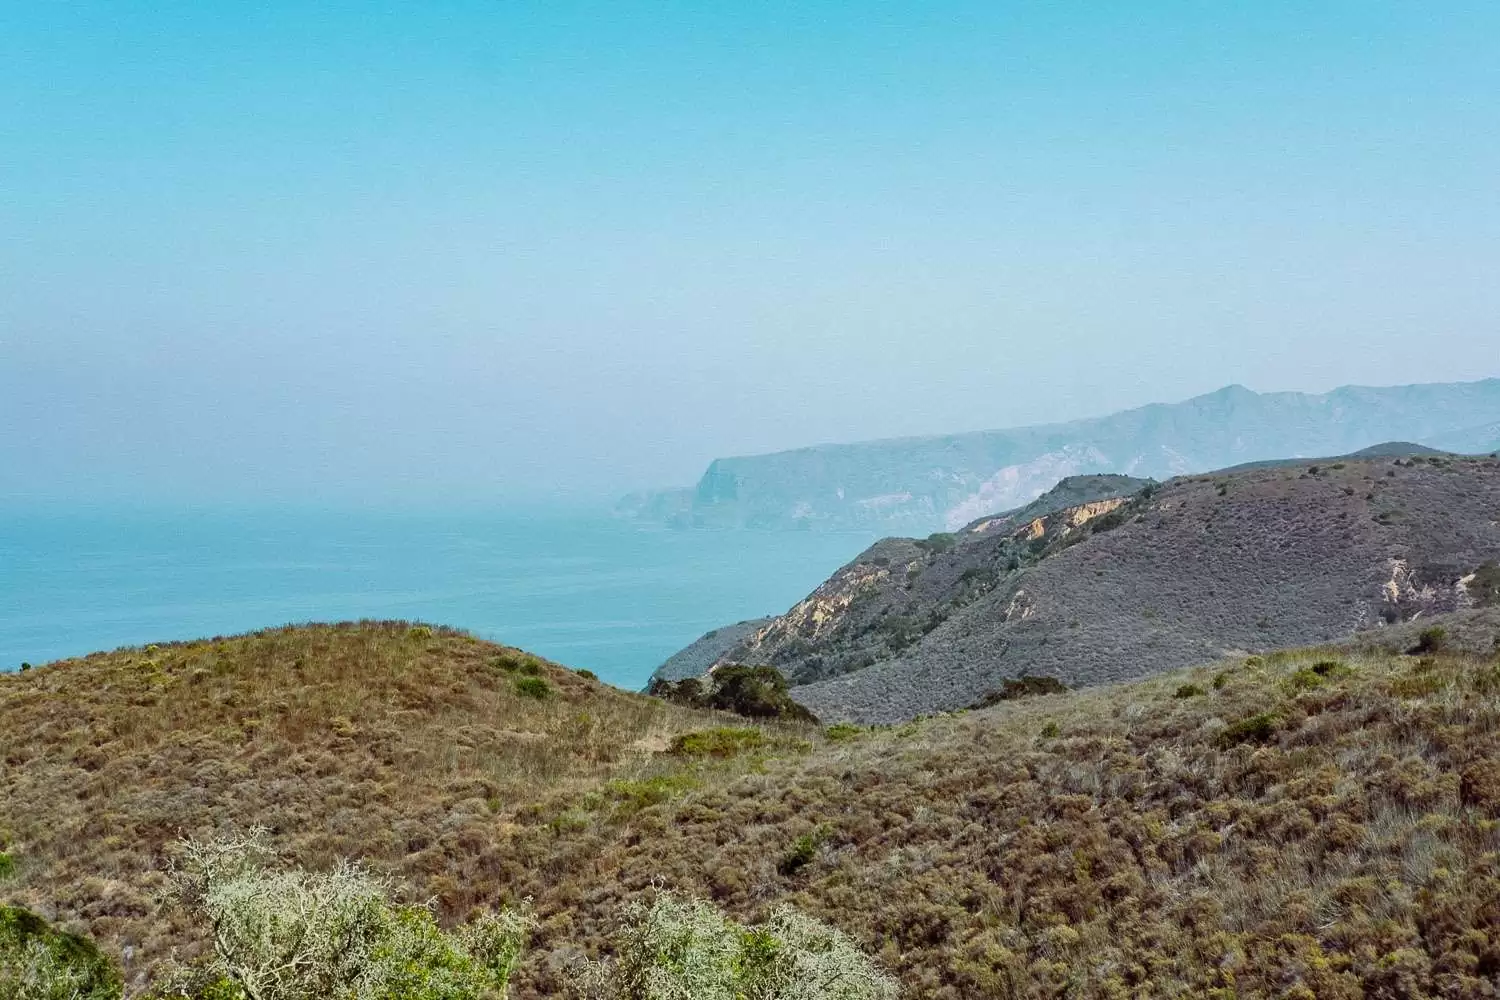 Rachel Off Duty: Ocean View at Santa Cruz Island, Channel Islands